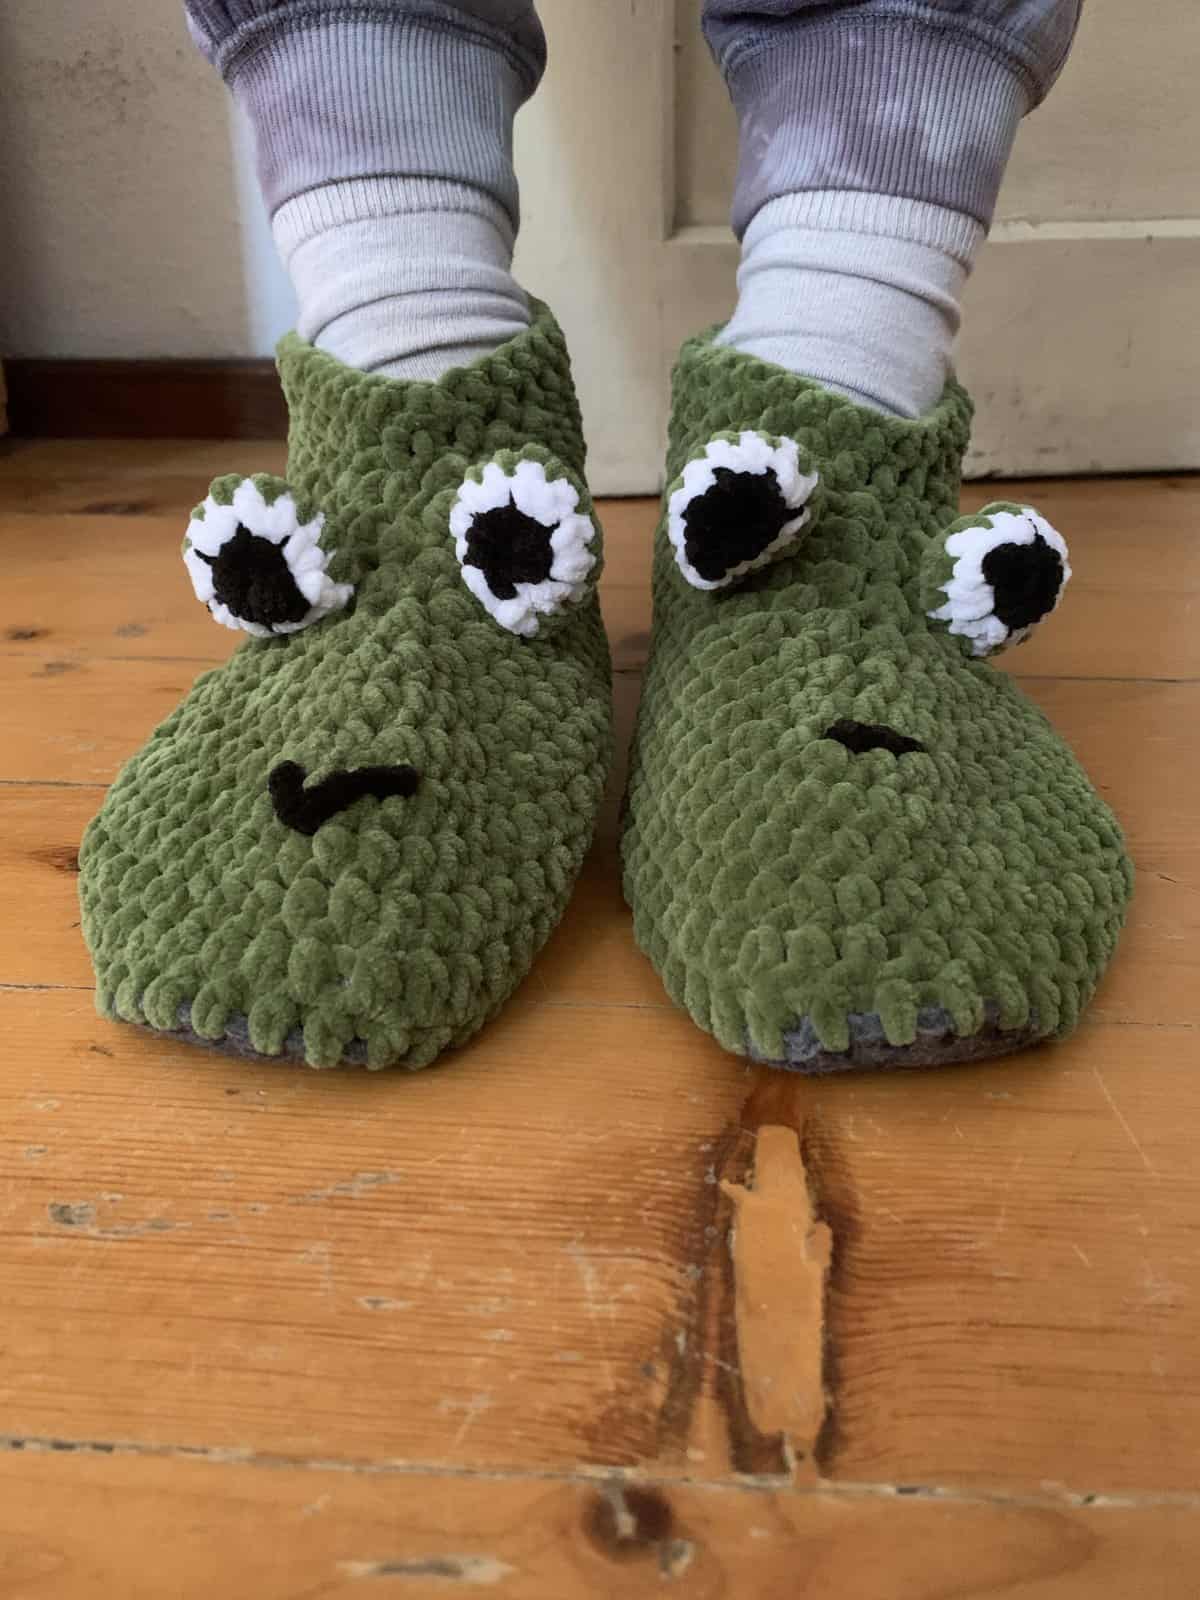 Frog socks crocheted by Sophie